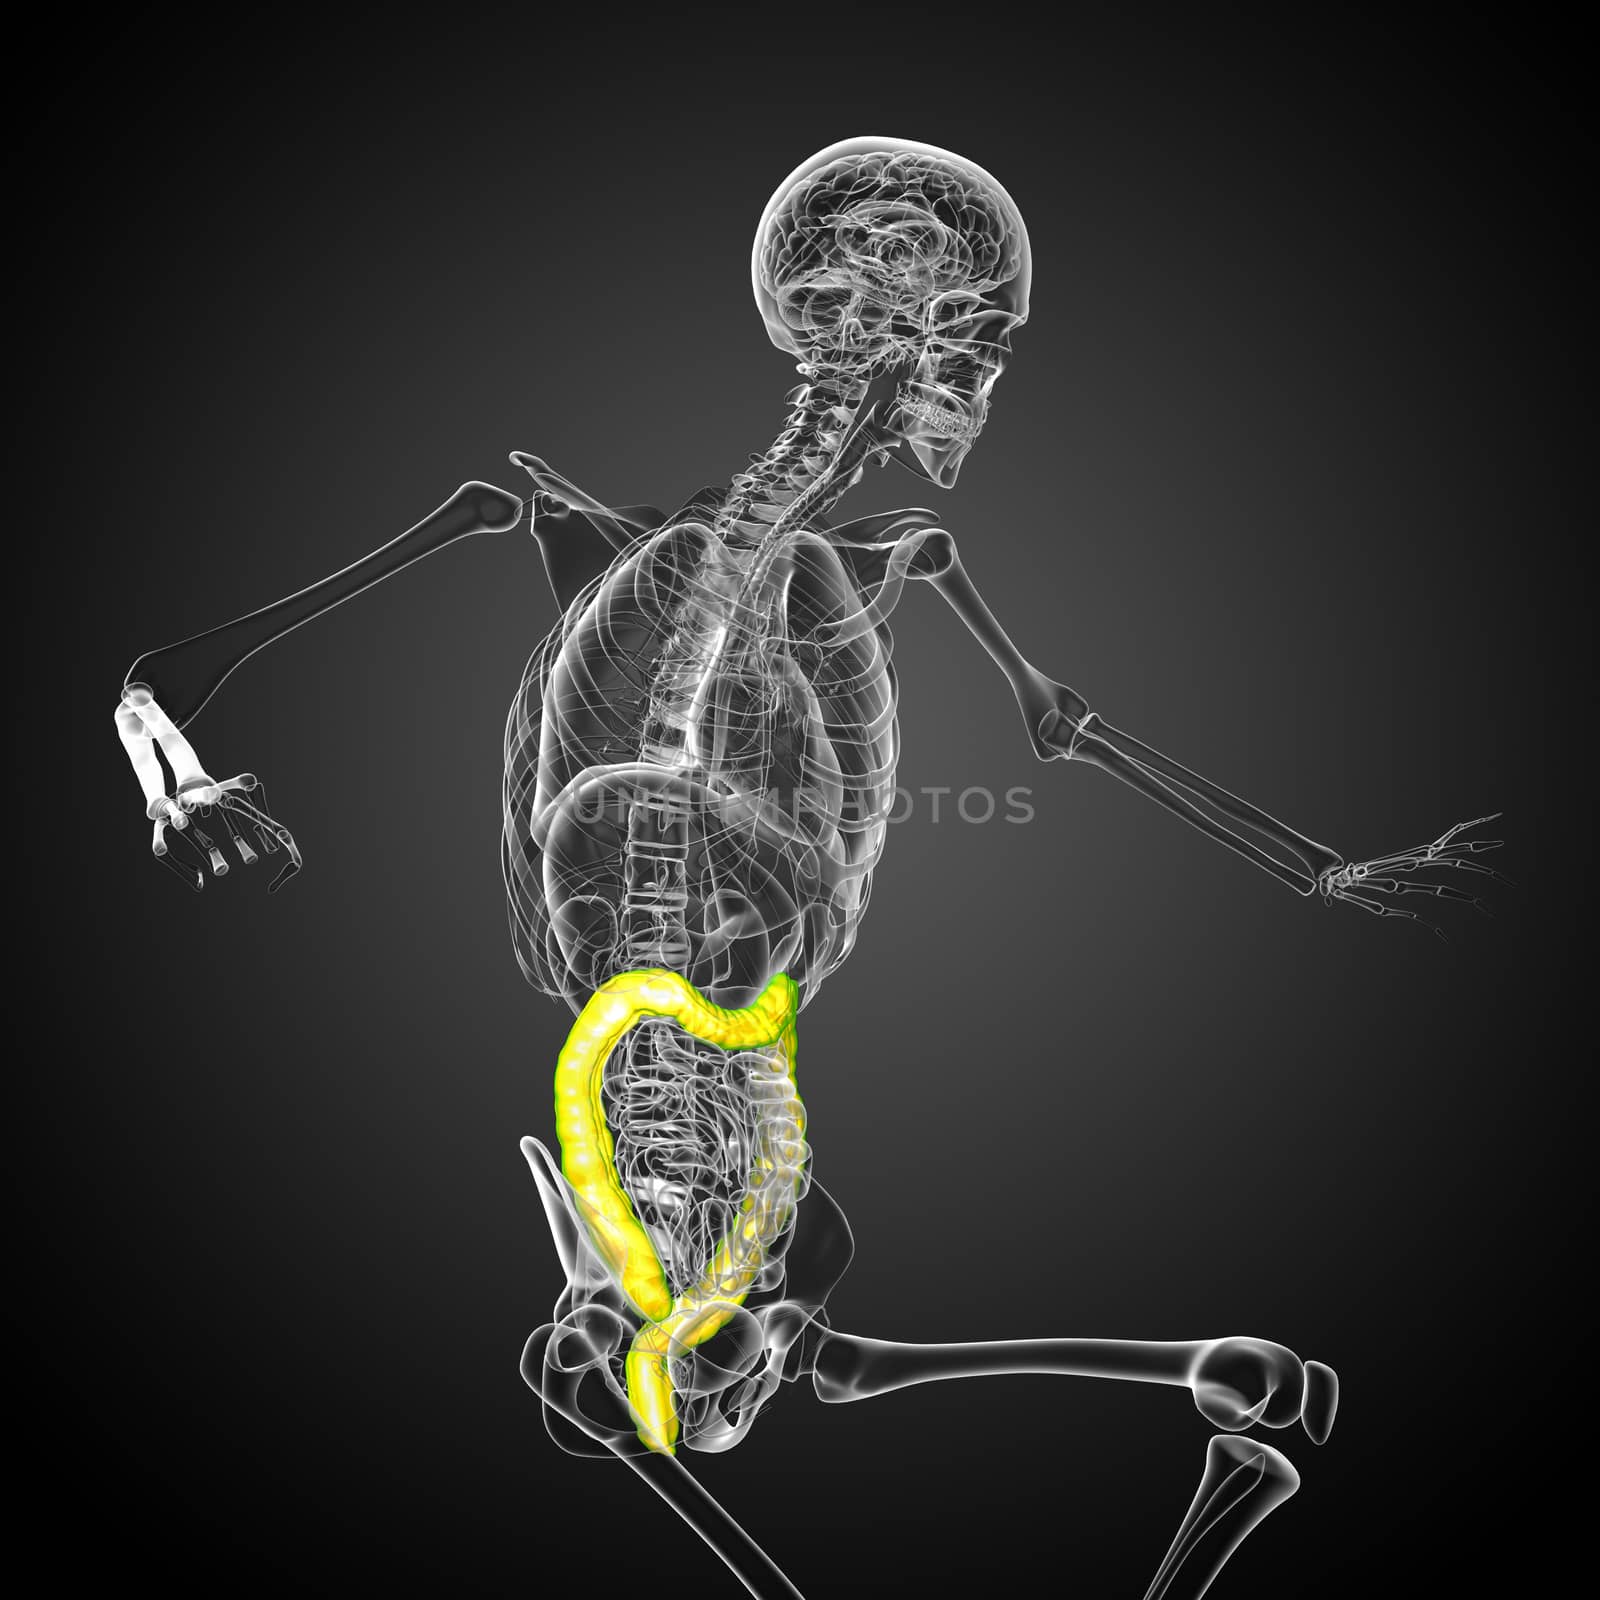 3d render medical illustration of the human larg intestine by maya2008